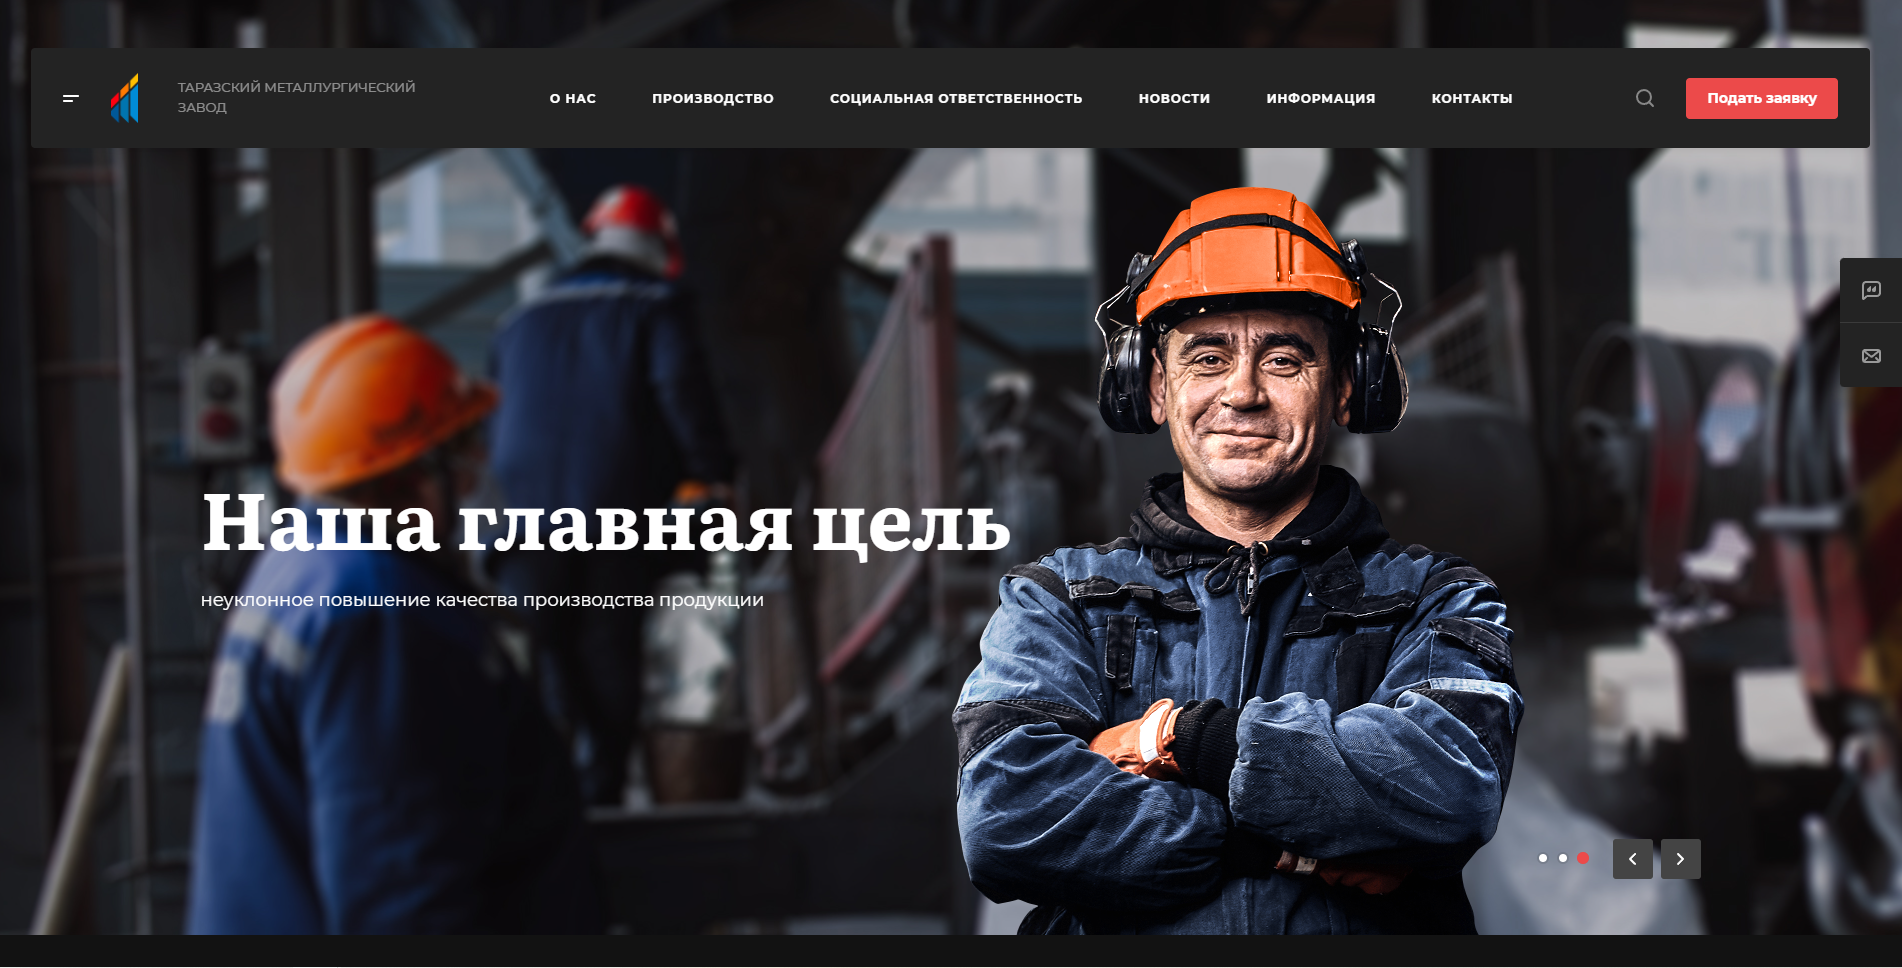 интернет-витрина металлургического завода тоо «таразский металлургический завод»